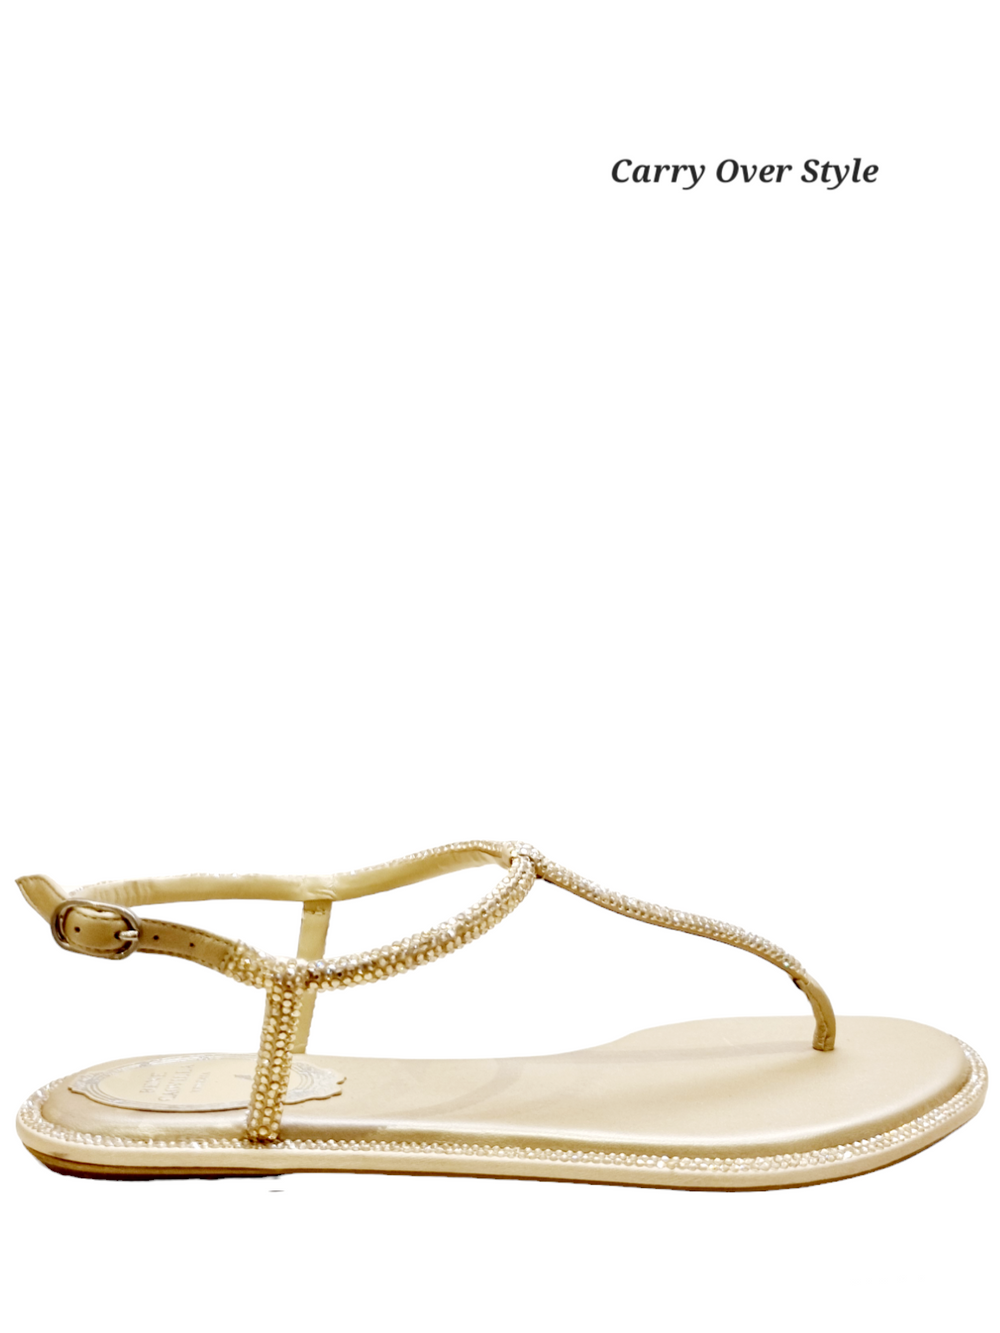 Diana Gold Jewel Sandals - Rene Caovilla - Liberty Shoes Australia